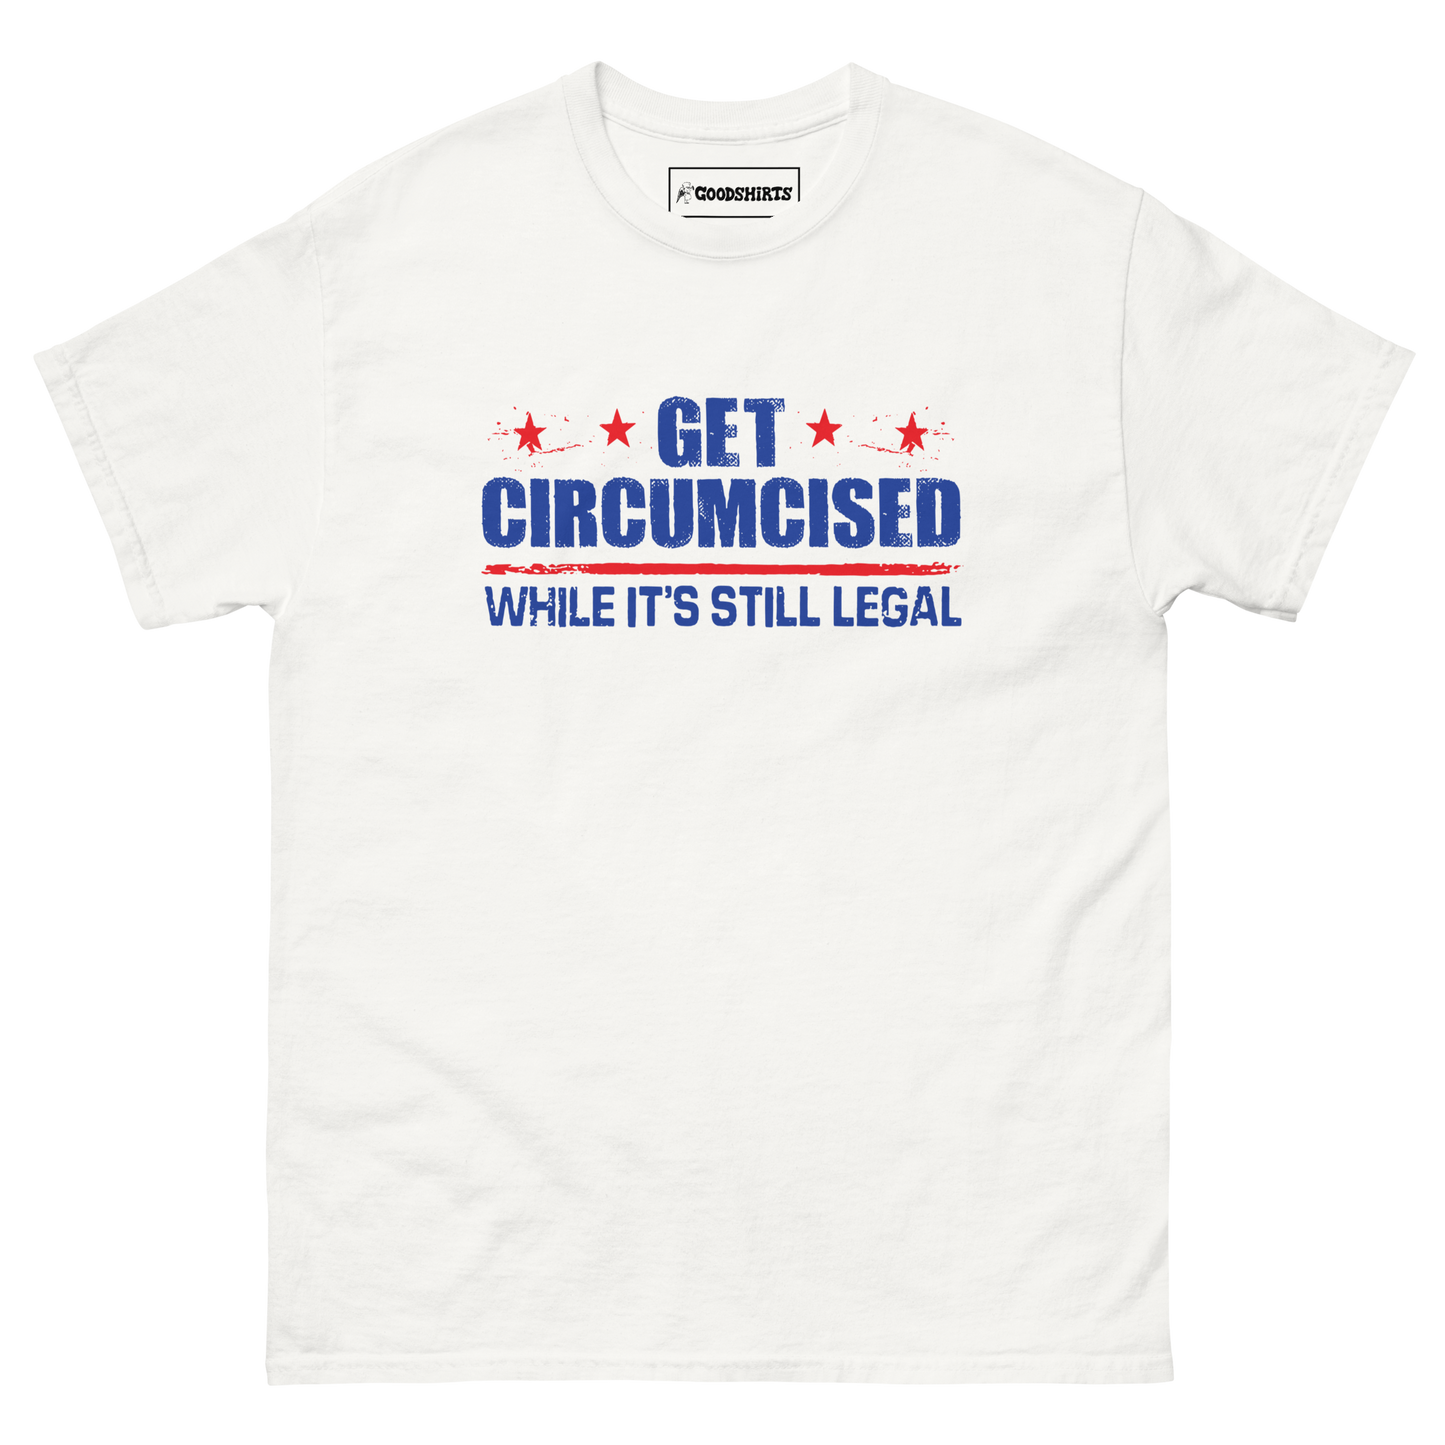 Get Circumcised While It's Still Legal.